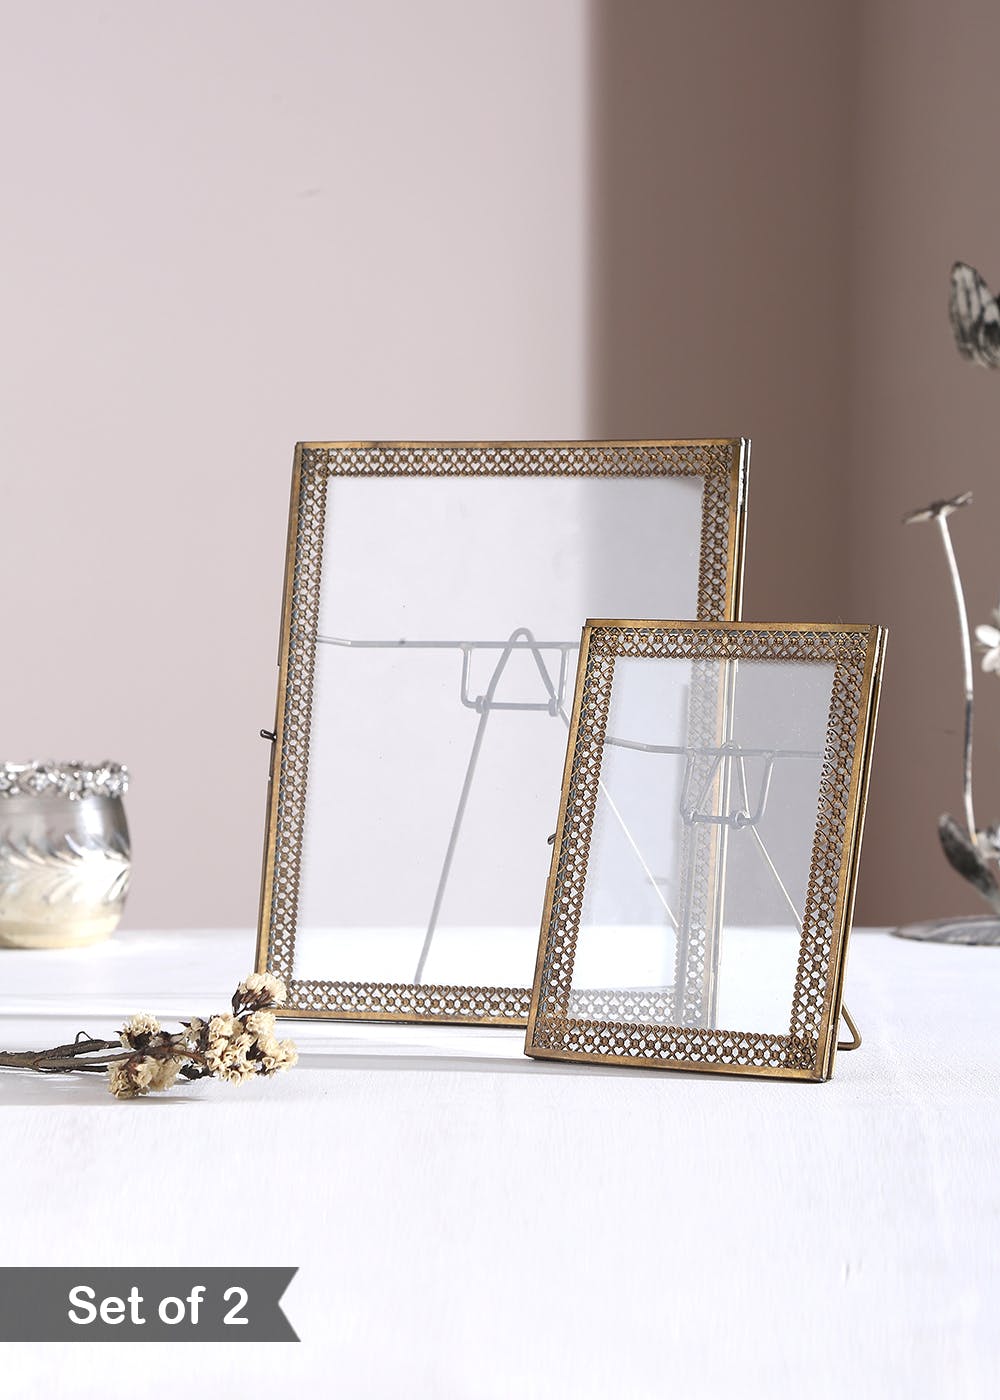 Get Antique Gold Photo Frame With Metal Details- Set Of 2 at ₹ 2800